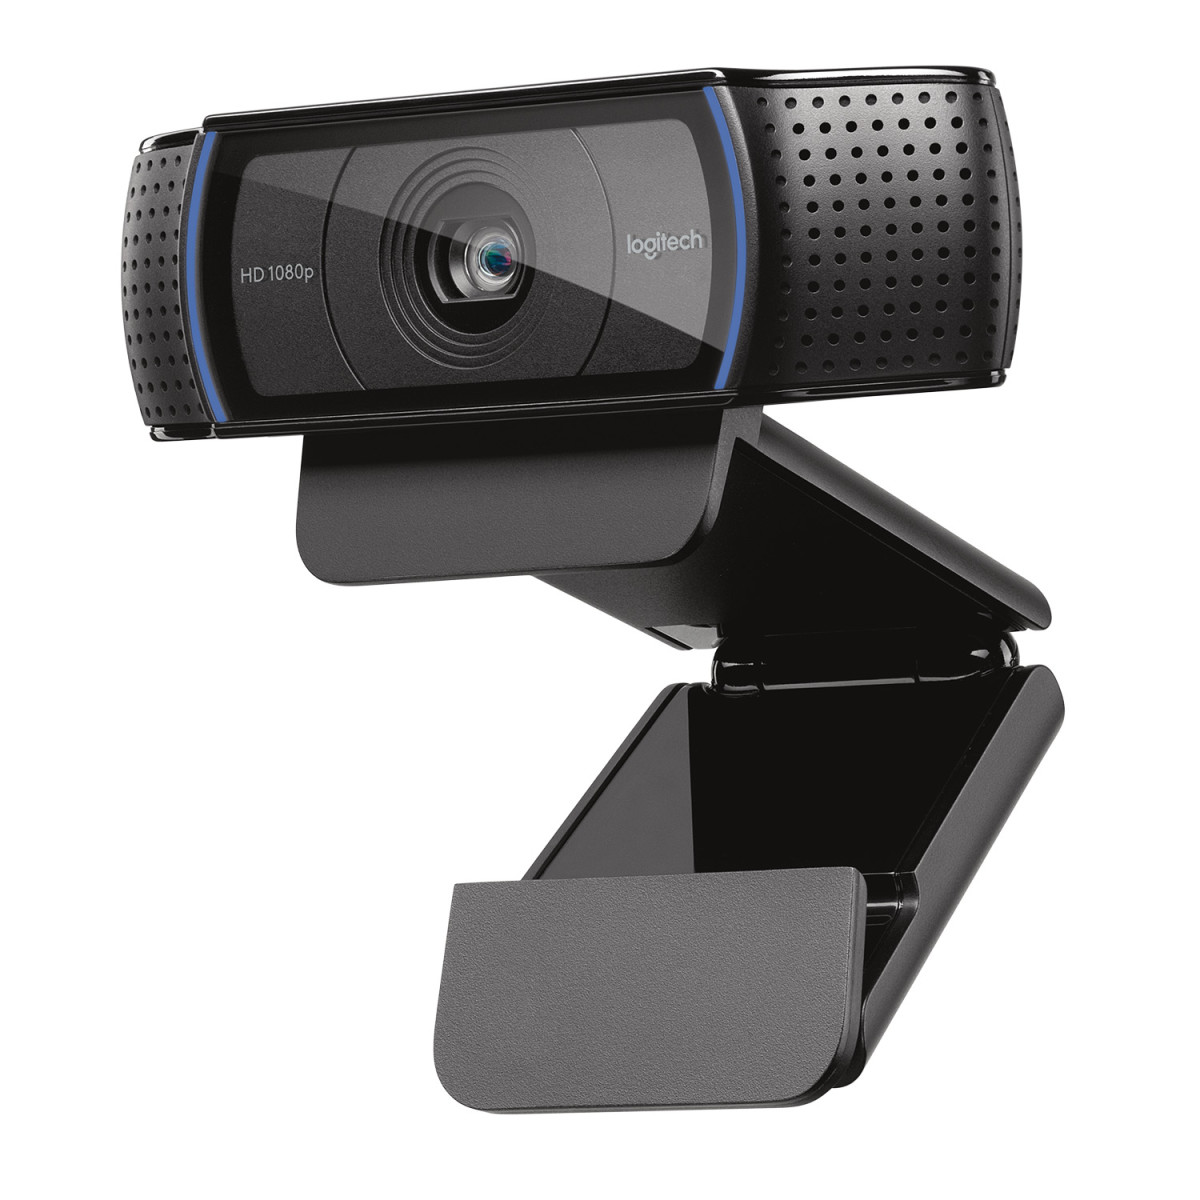 Hd Pro Webcam C920 - Usb - Emea